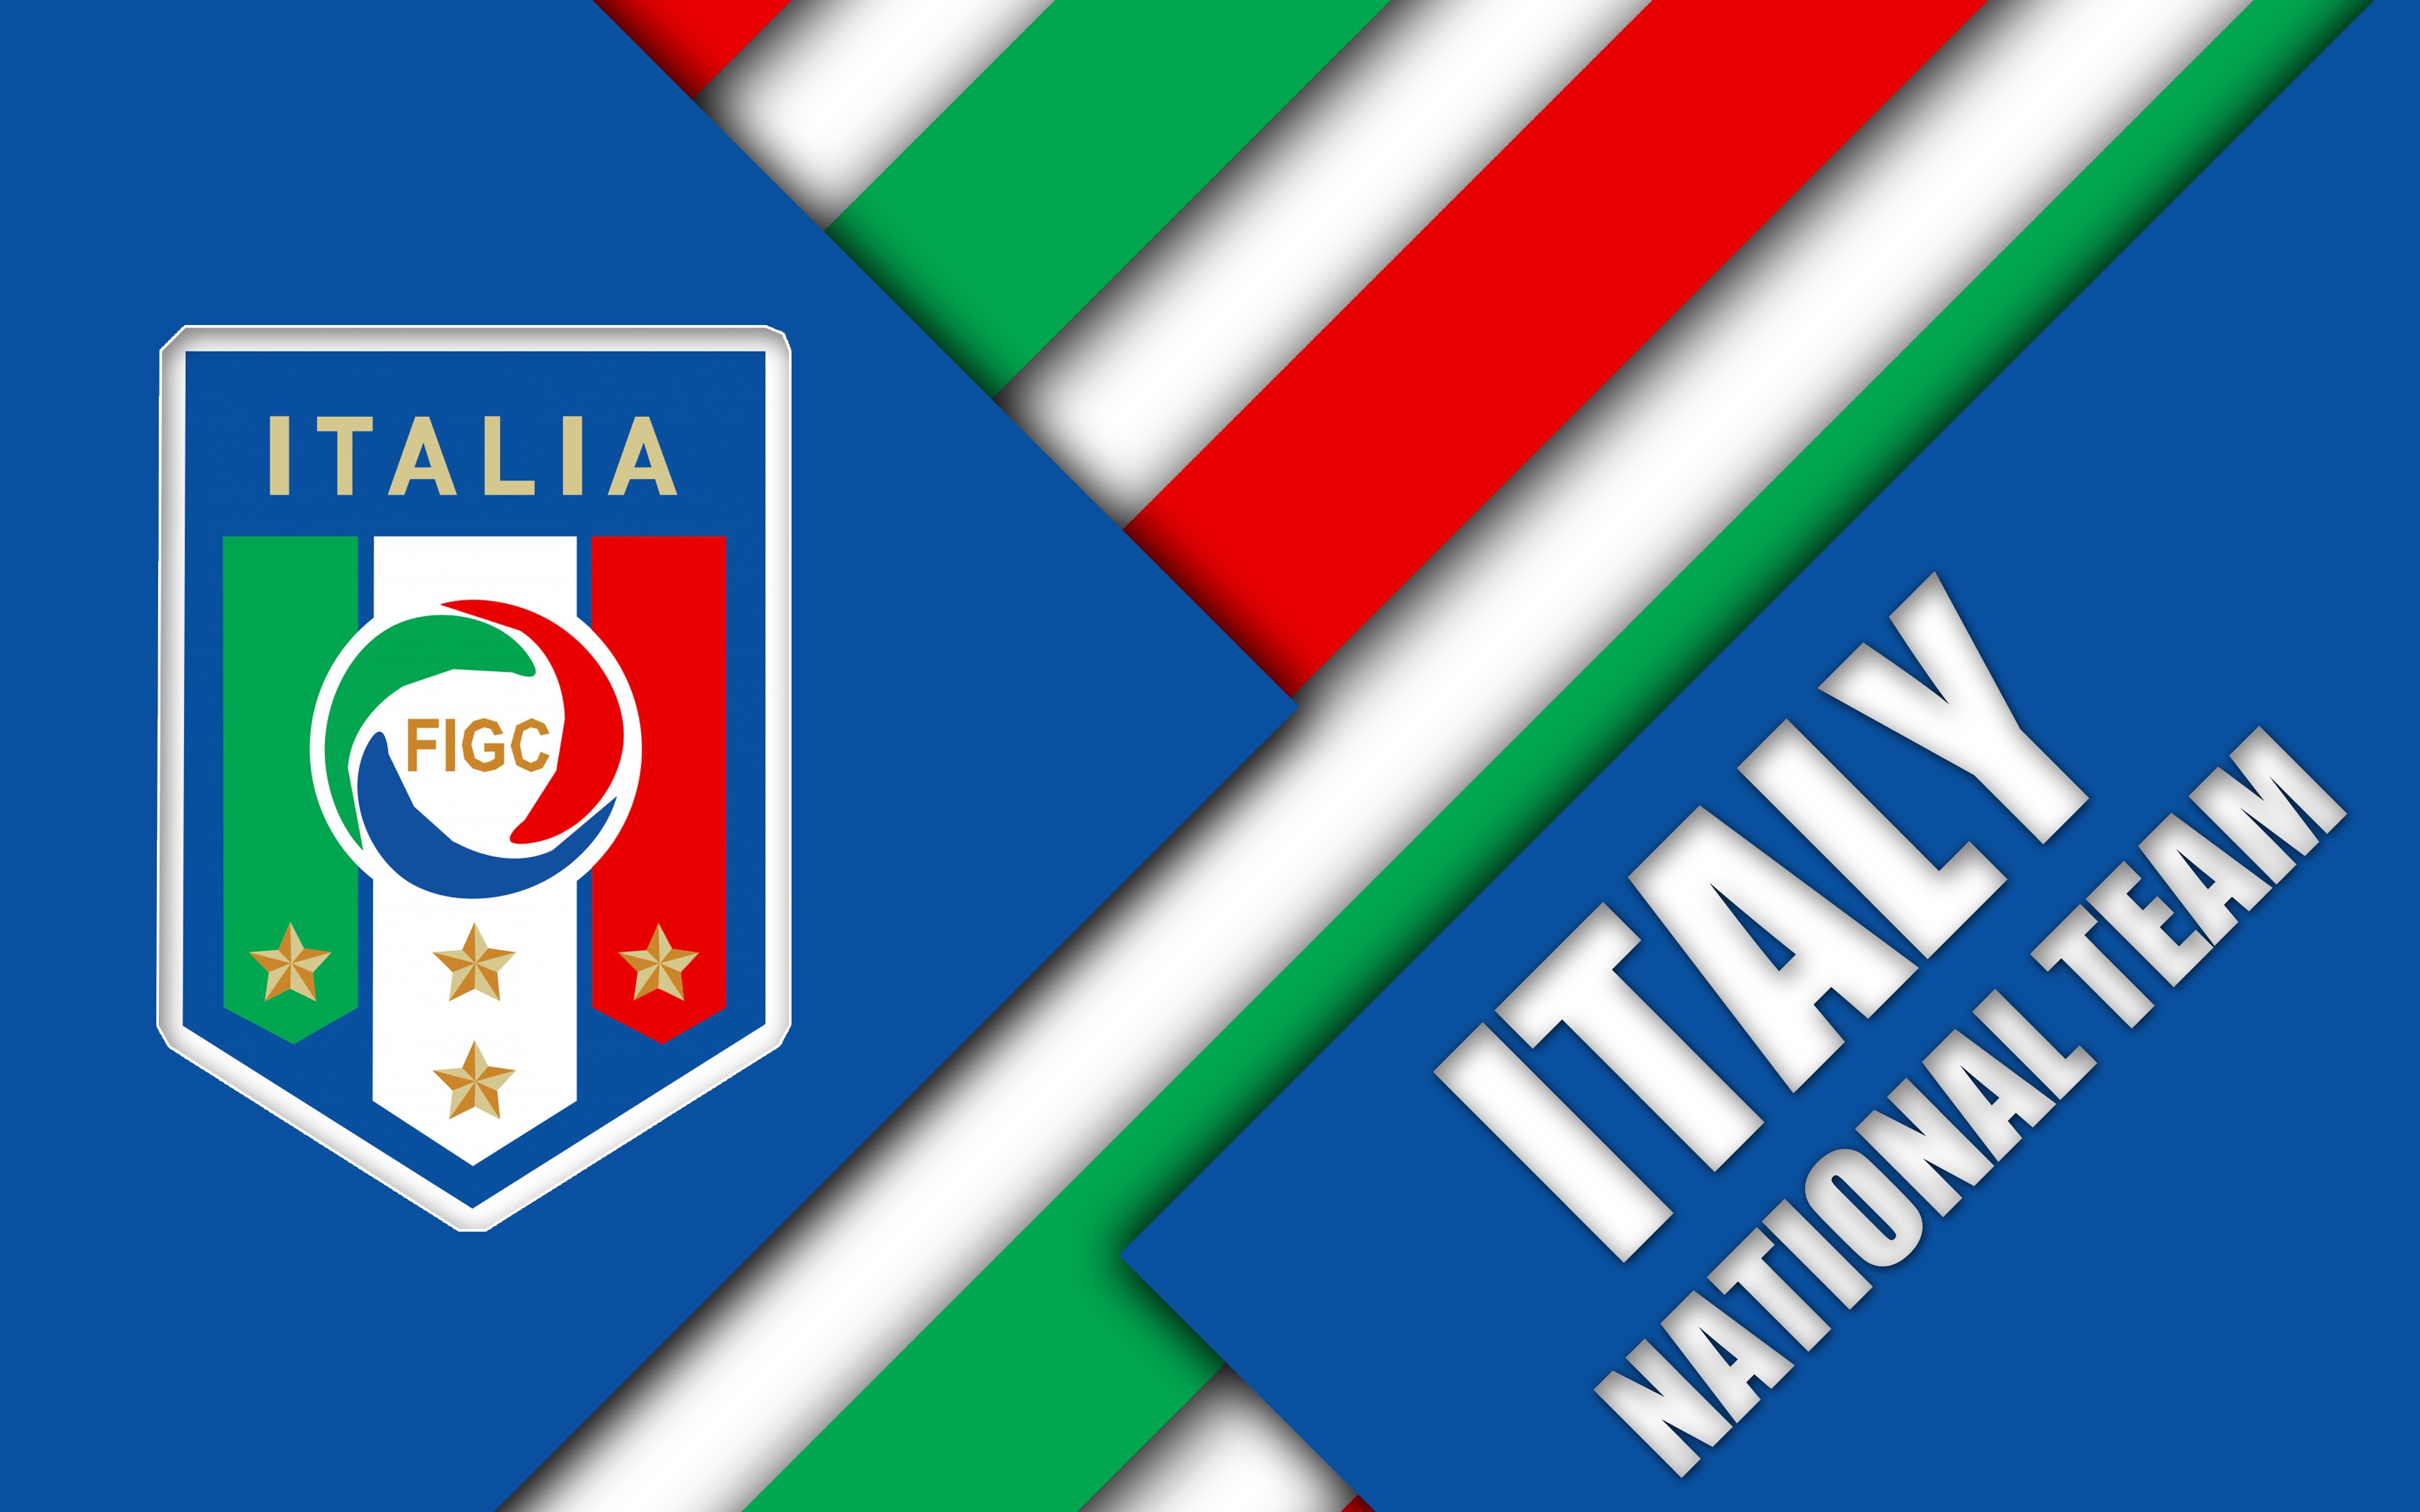 Italy National Football Team 4k Ultra HD Wallpaper. Background